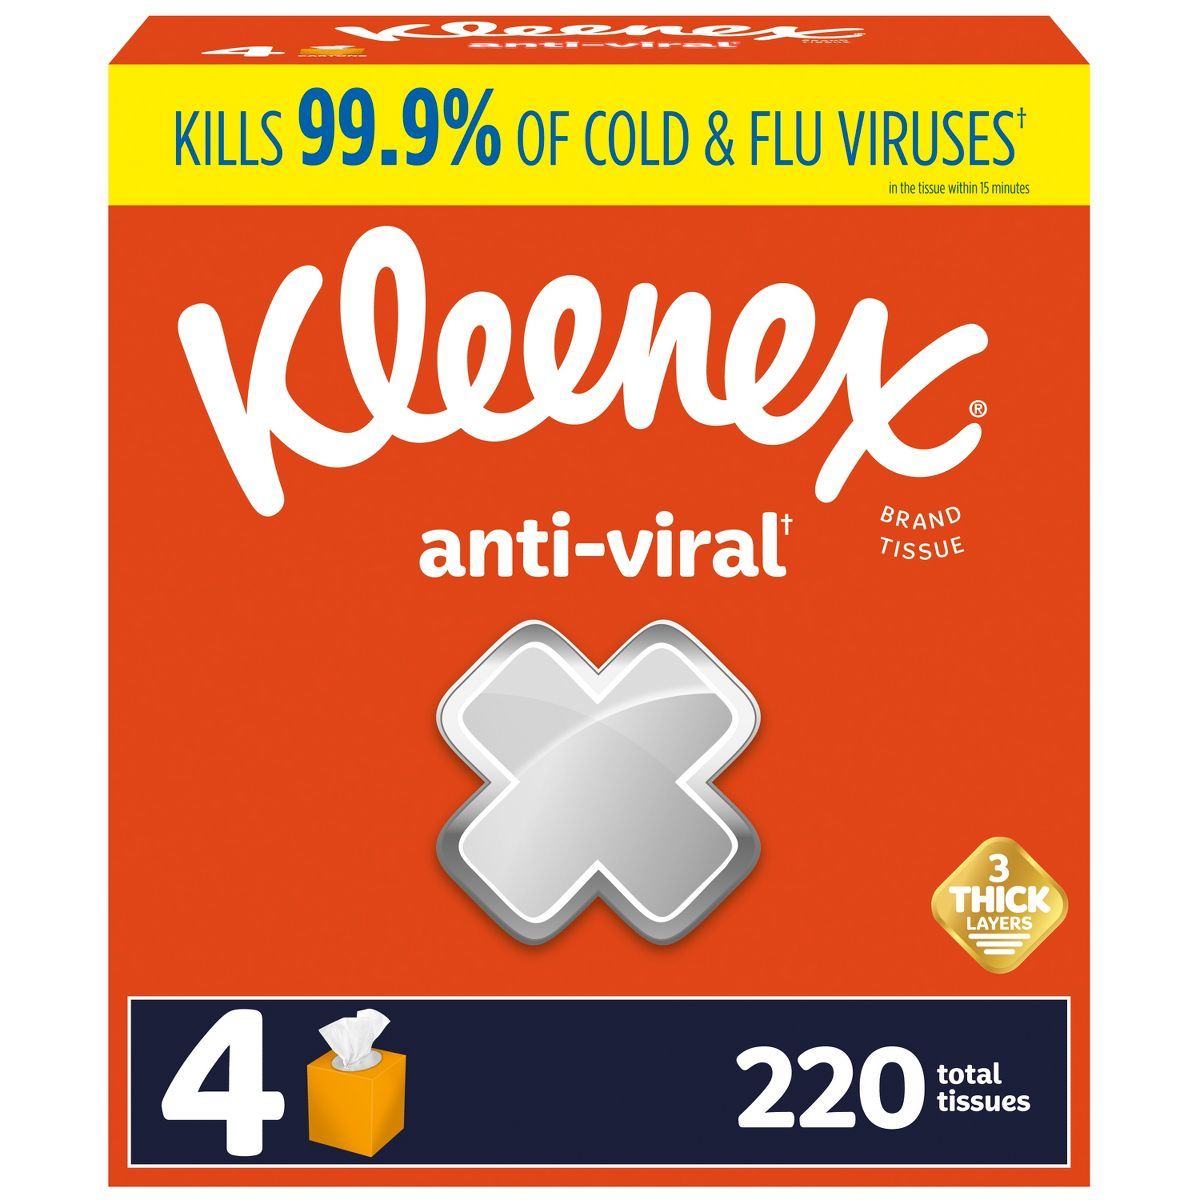 Shop all Kleenex | Target